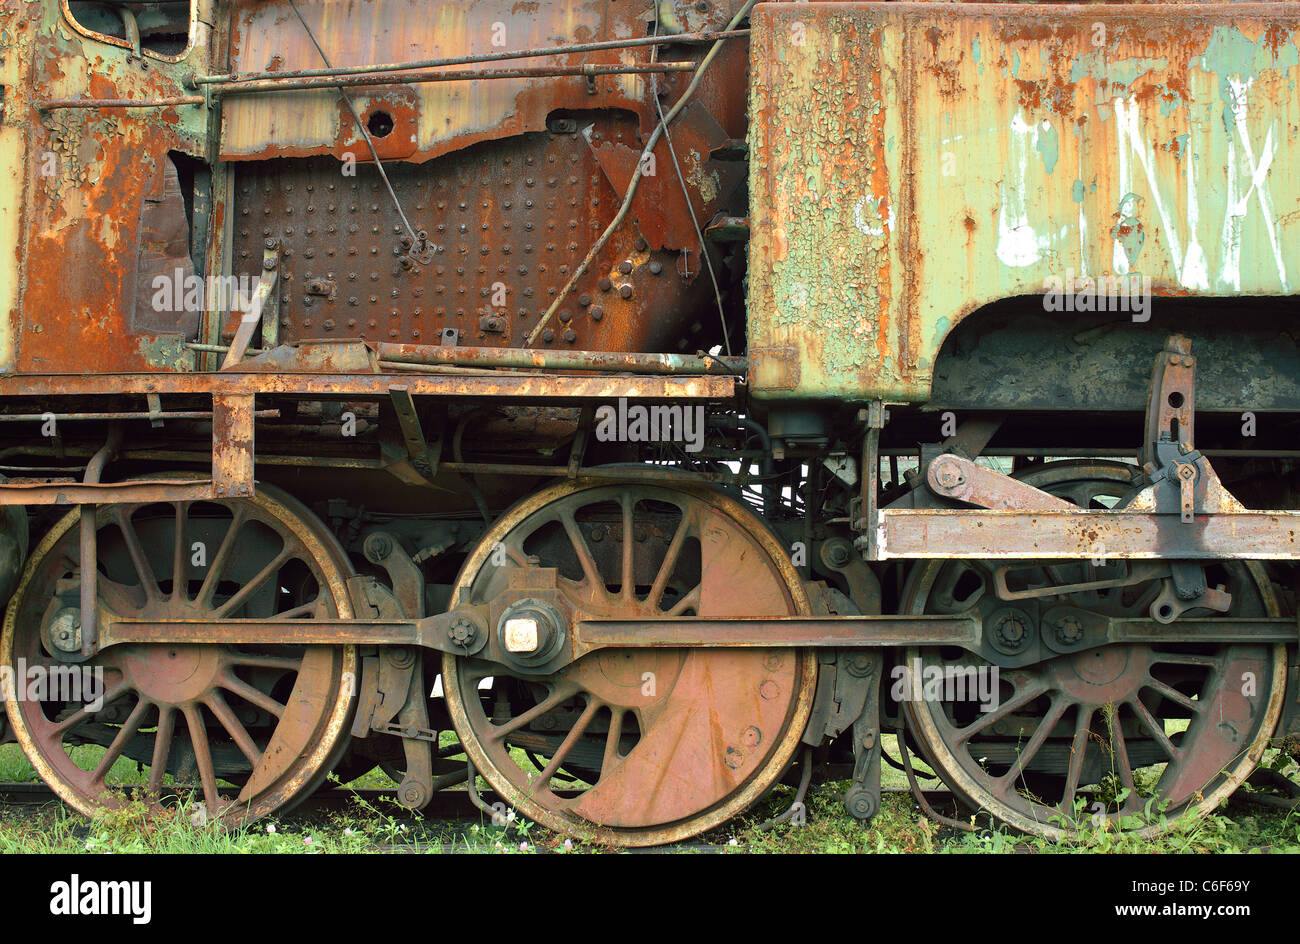 Rusty abandoned steam engine locomotive Stock Photo